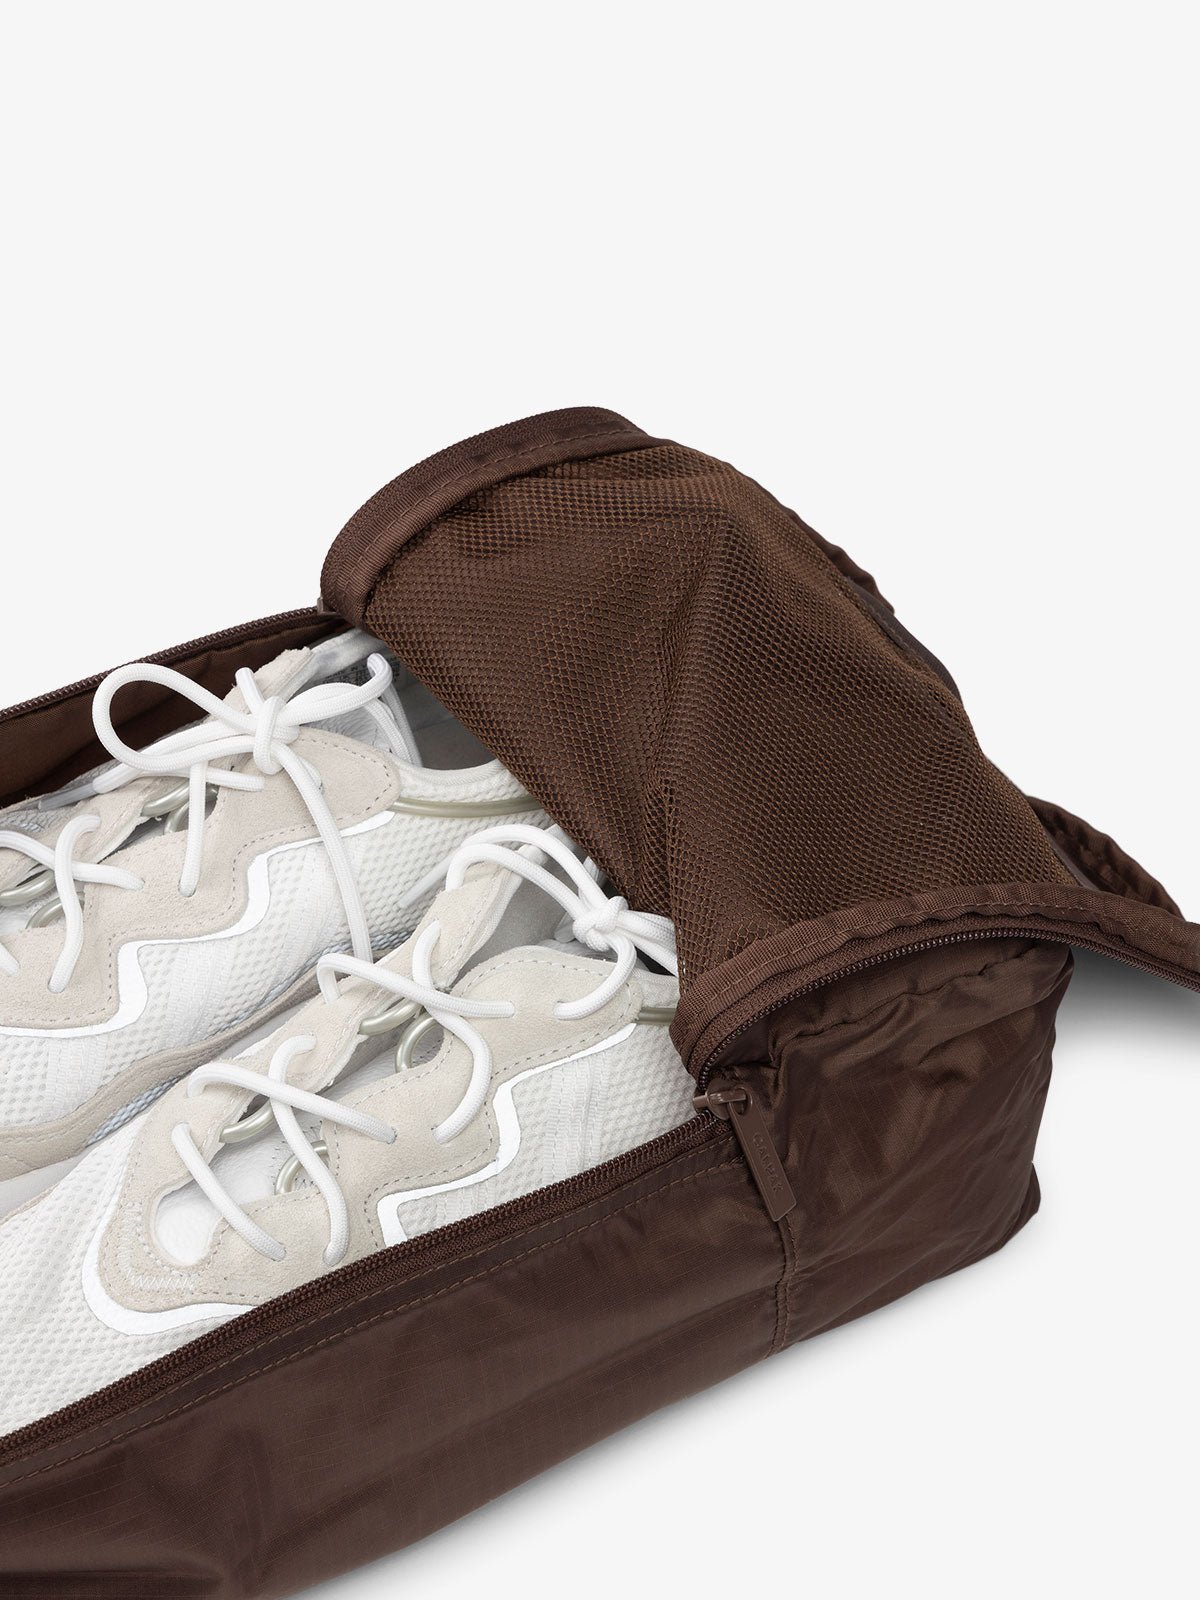 CALPAK Compakt zippered shoe travel bag with mesh pocket in brown